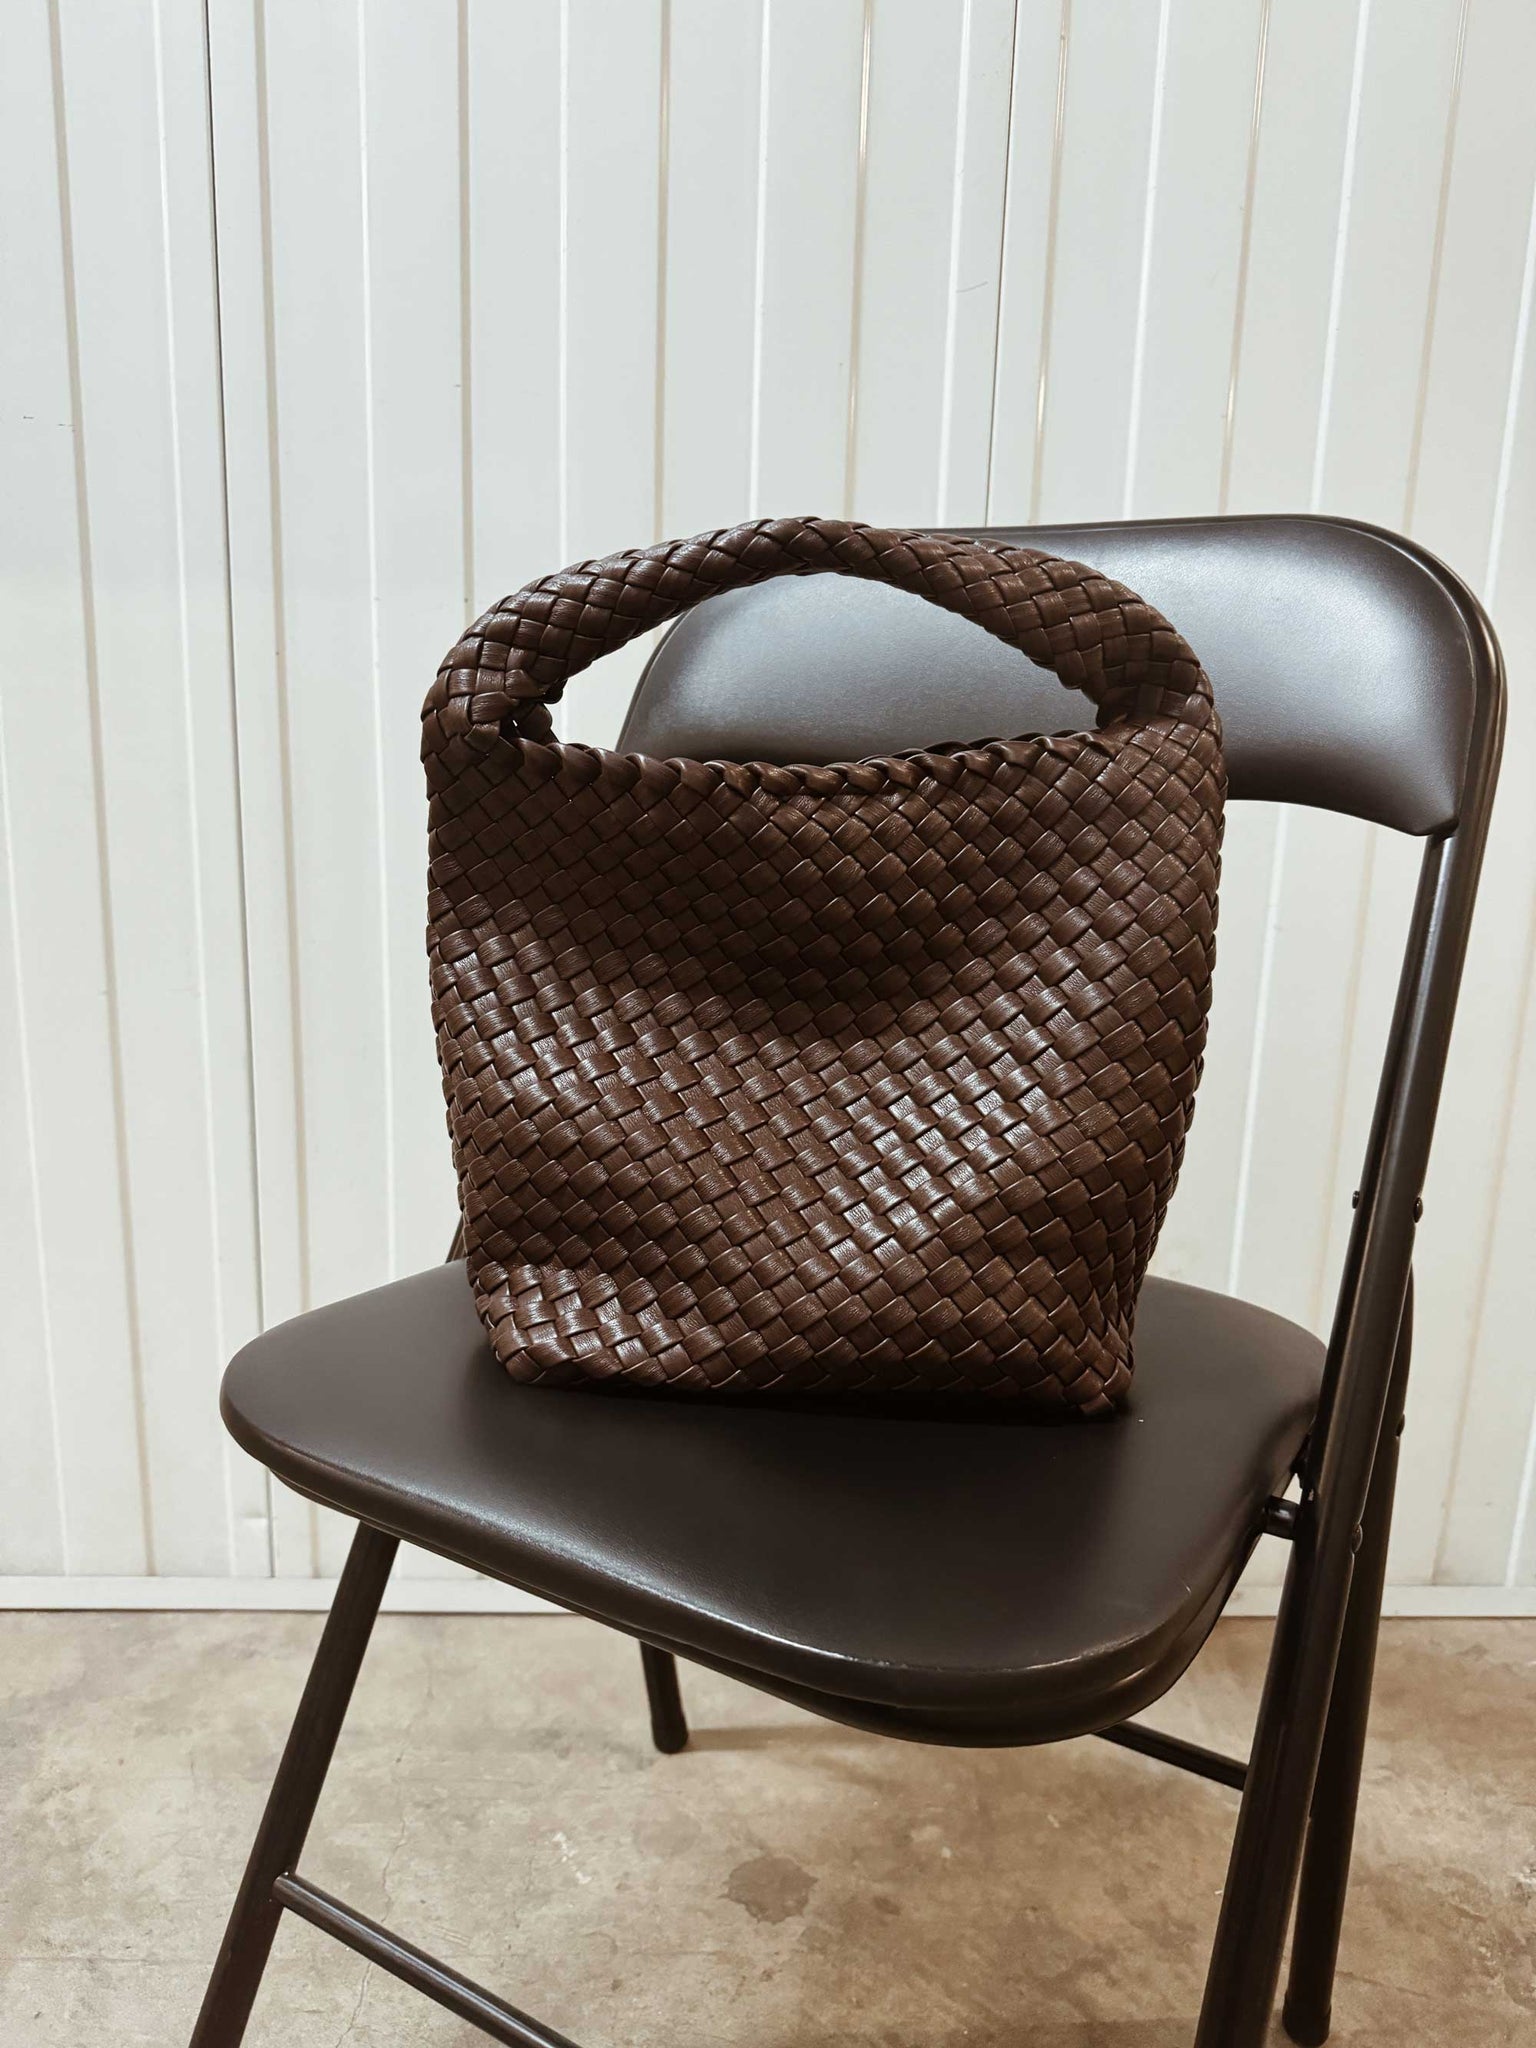 Rylan, Rylan Studio, Woven Alt-Leather Small Tote Bag, Handbag, Vegan Leather